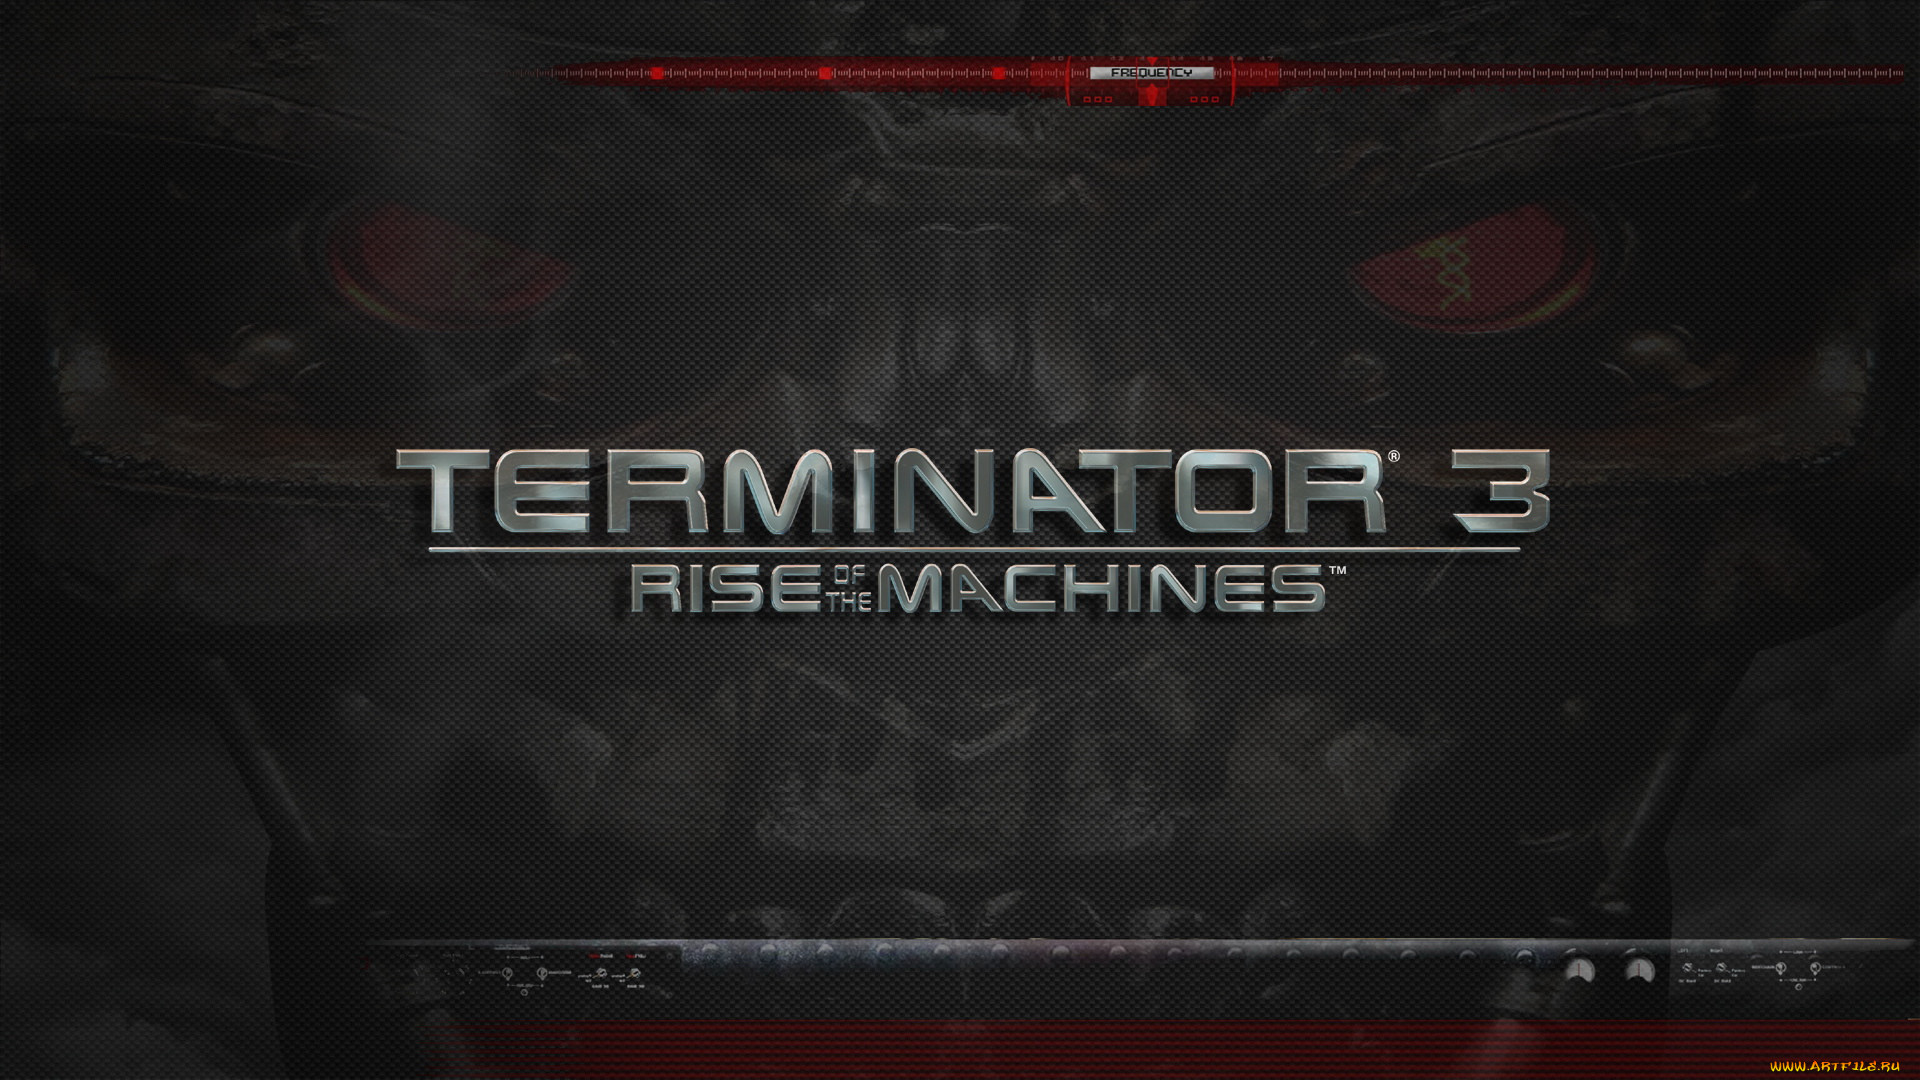  , terminator 3,  rise of the machines, 